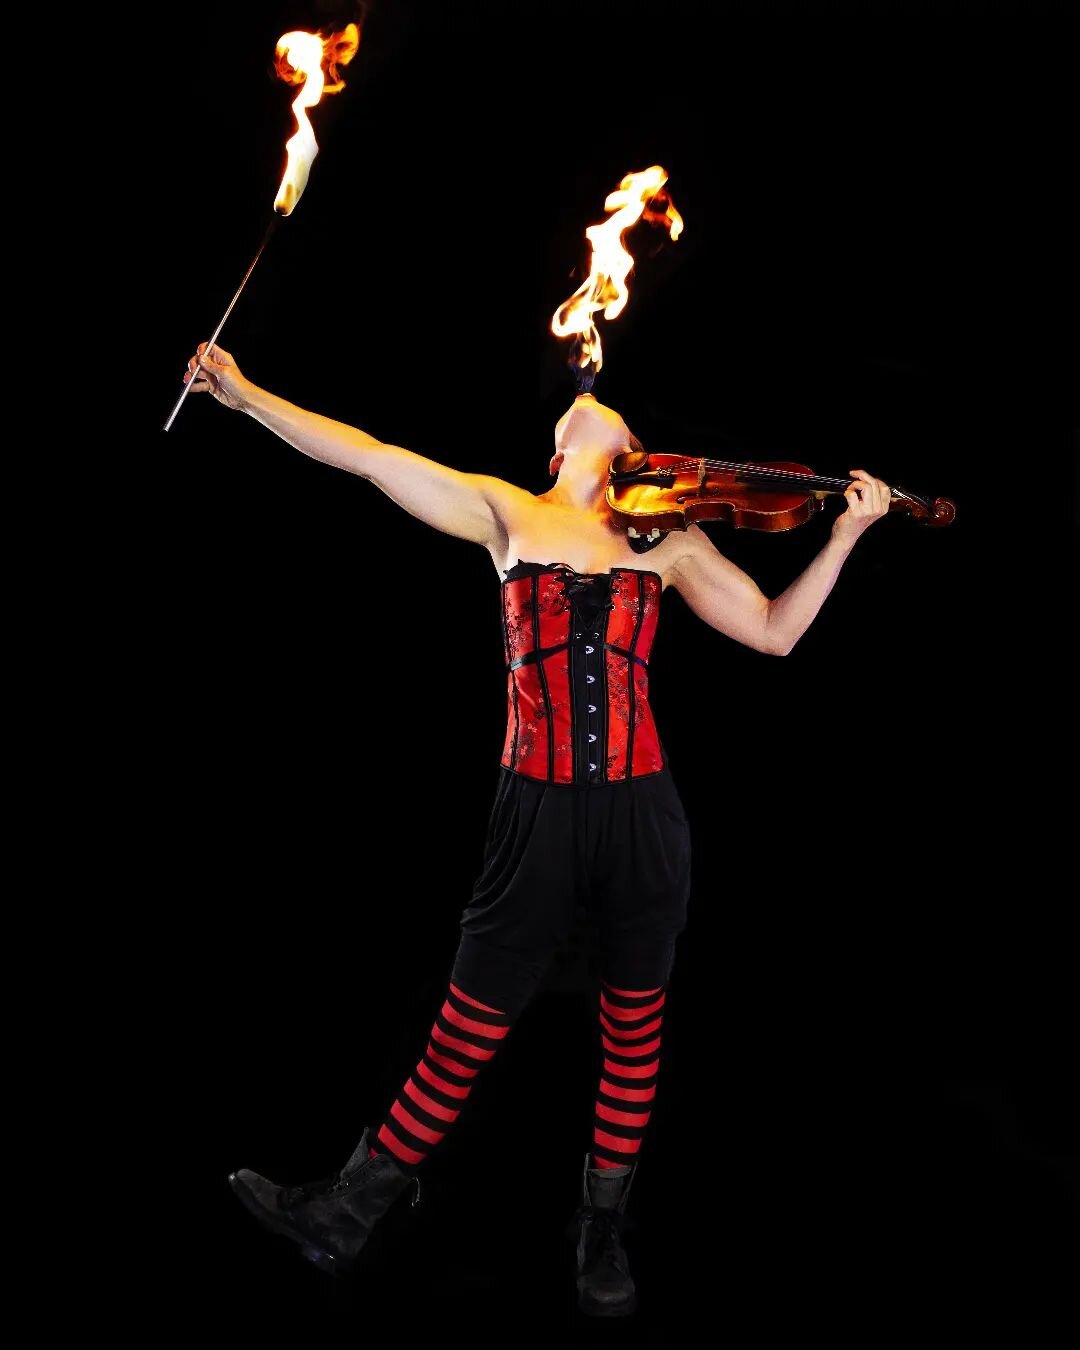 &diams;️Sonja Sapphire&diams;️

...
📸 by @ovcharenko_viktoria
#theredsapphires #fireeating #fire #fireartist #violin #violinvirtuoso #violinstagram #violinist #circusopera #sonjaschebeck